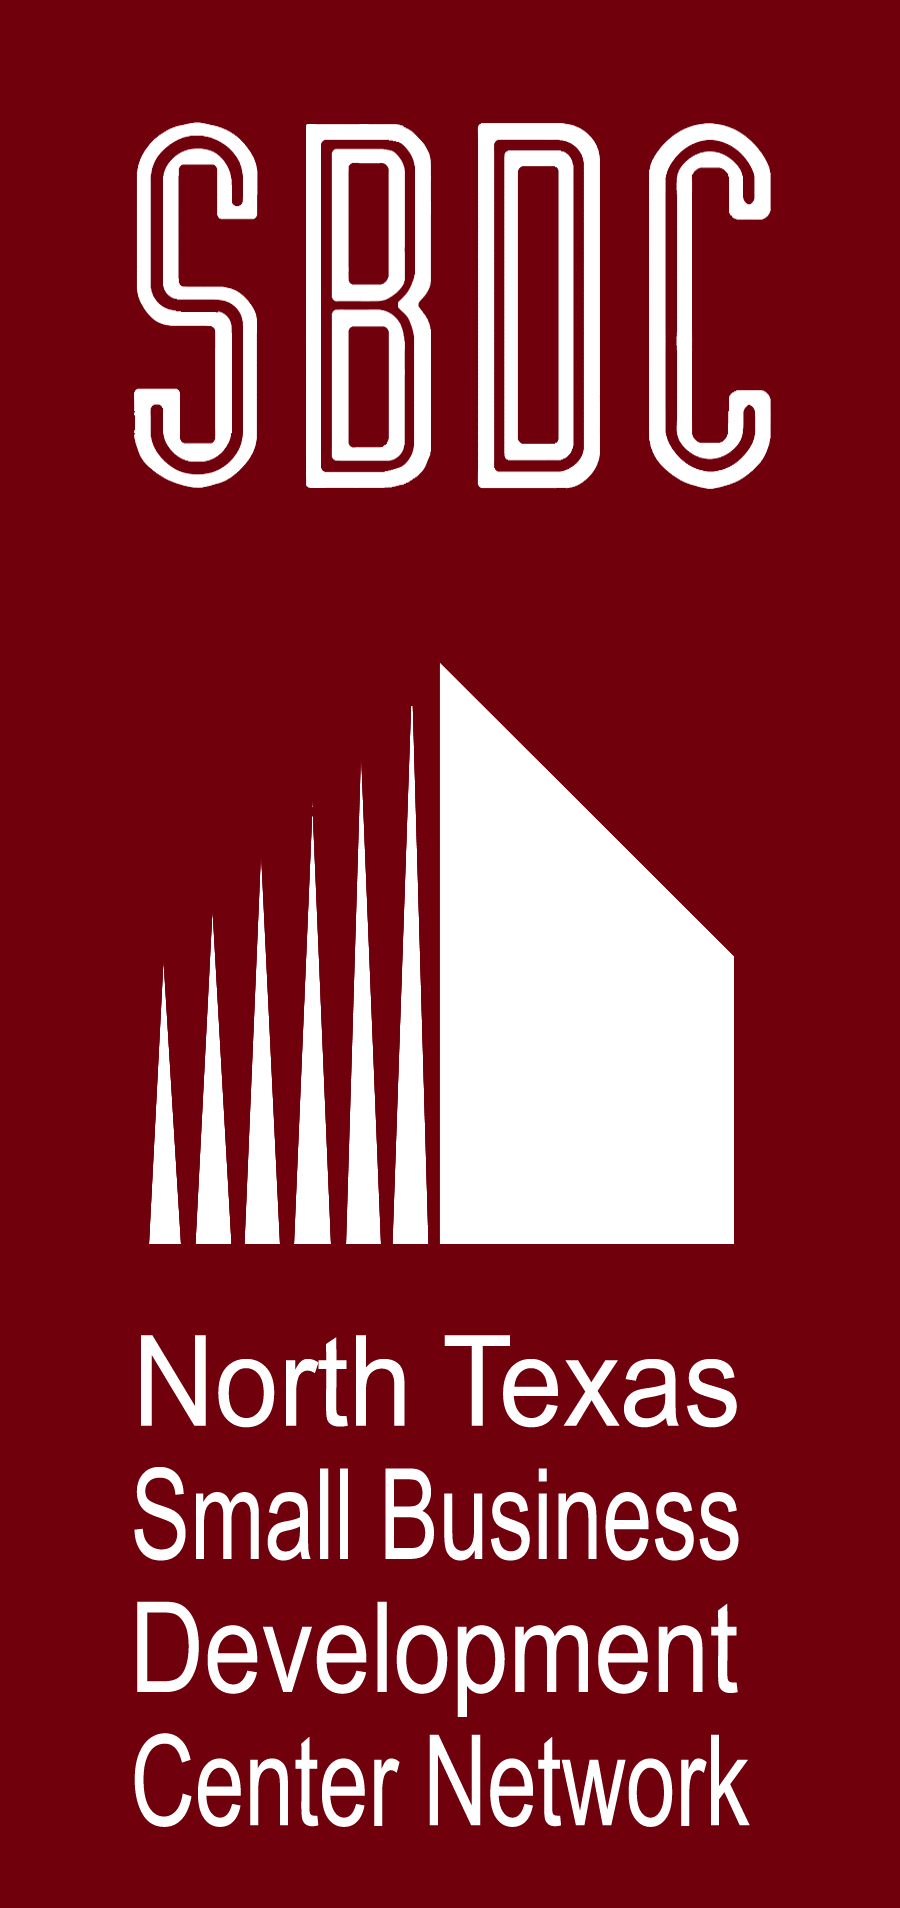 NTCC /uploads/2014/02/sbdc_logo.jpg